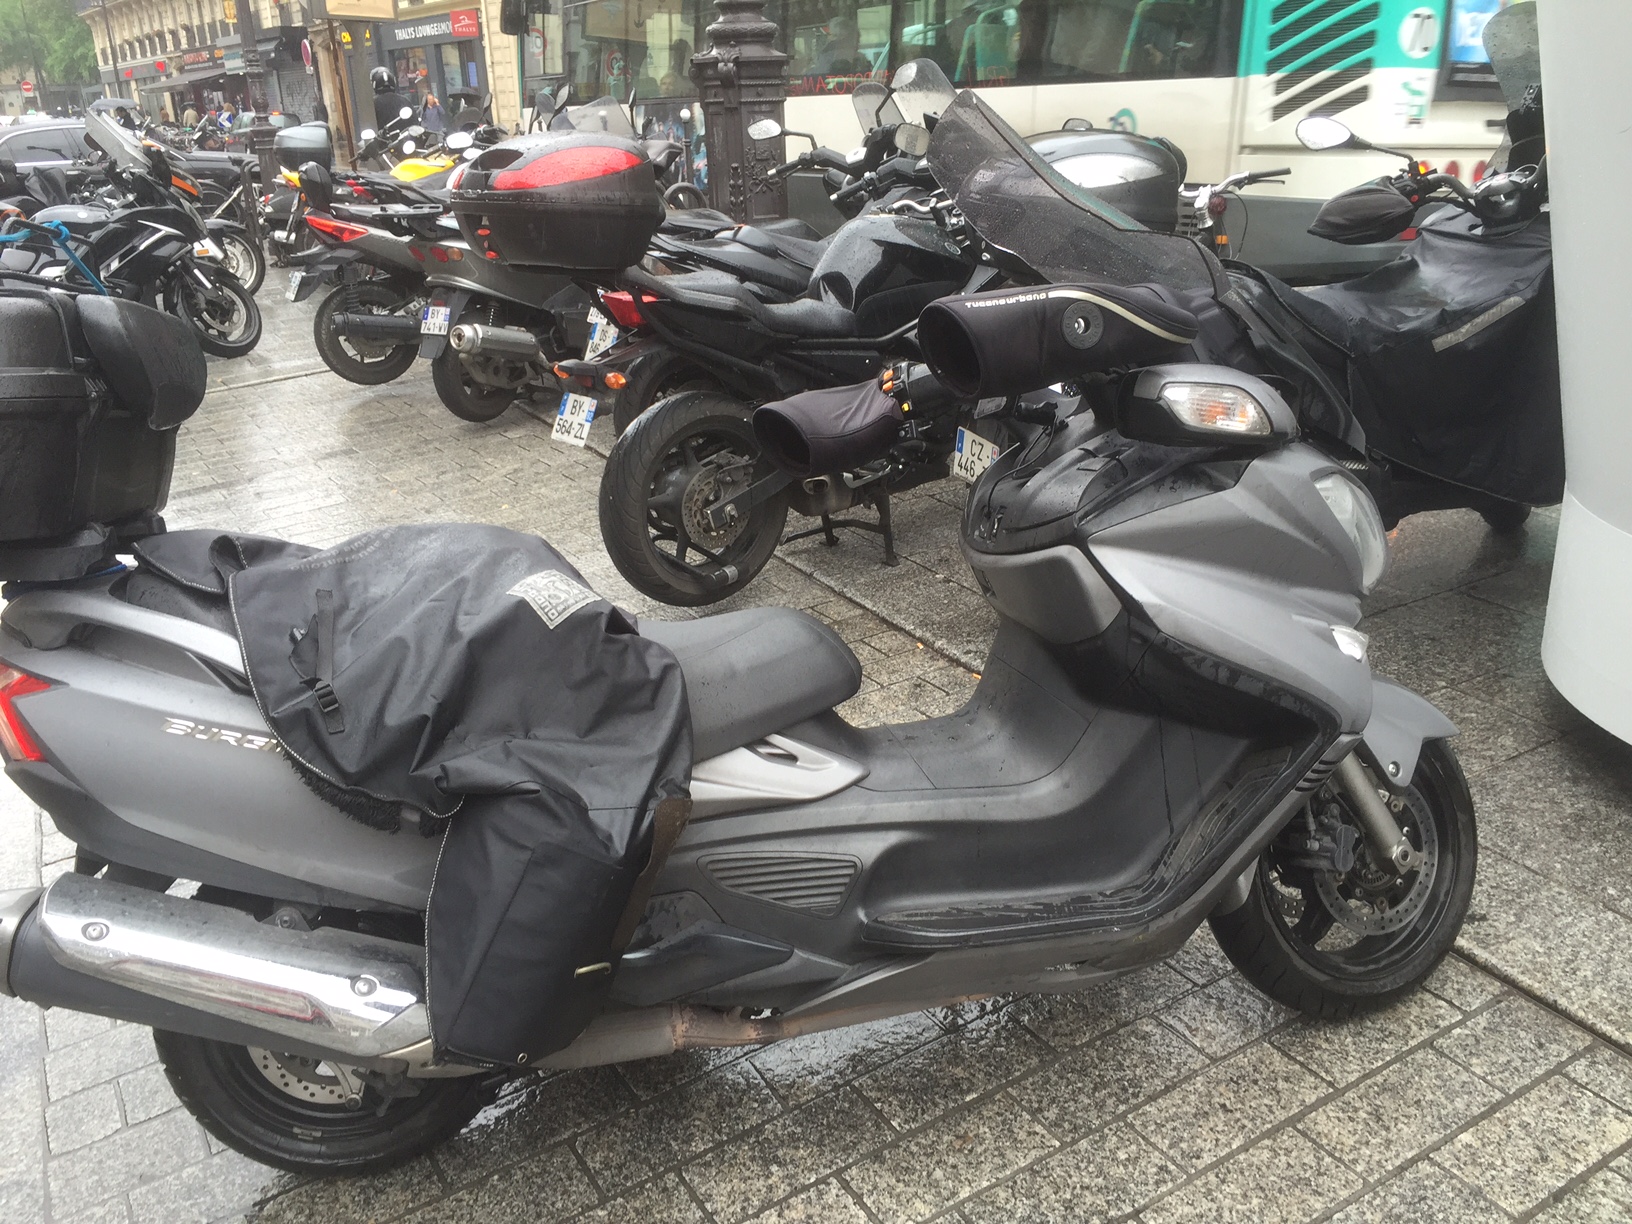 Paris: Motor cycle taxi. Don't think so!